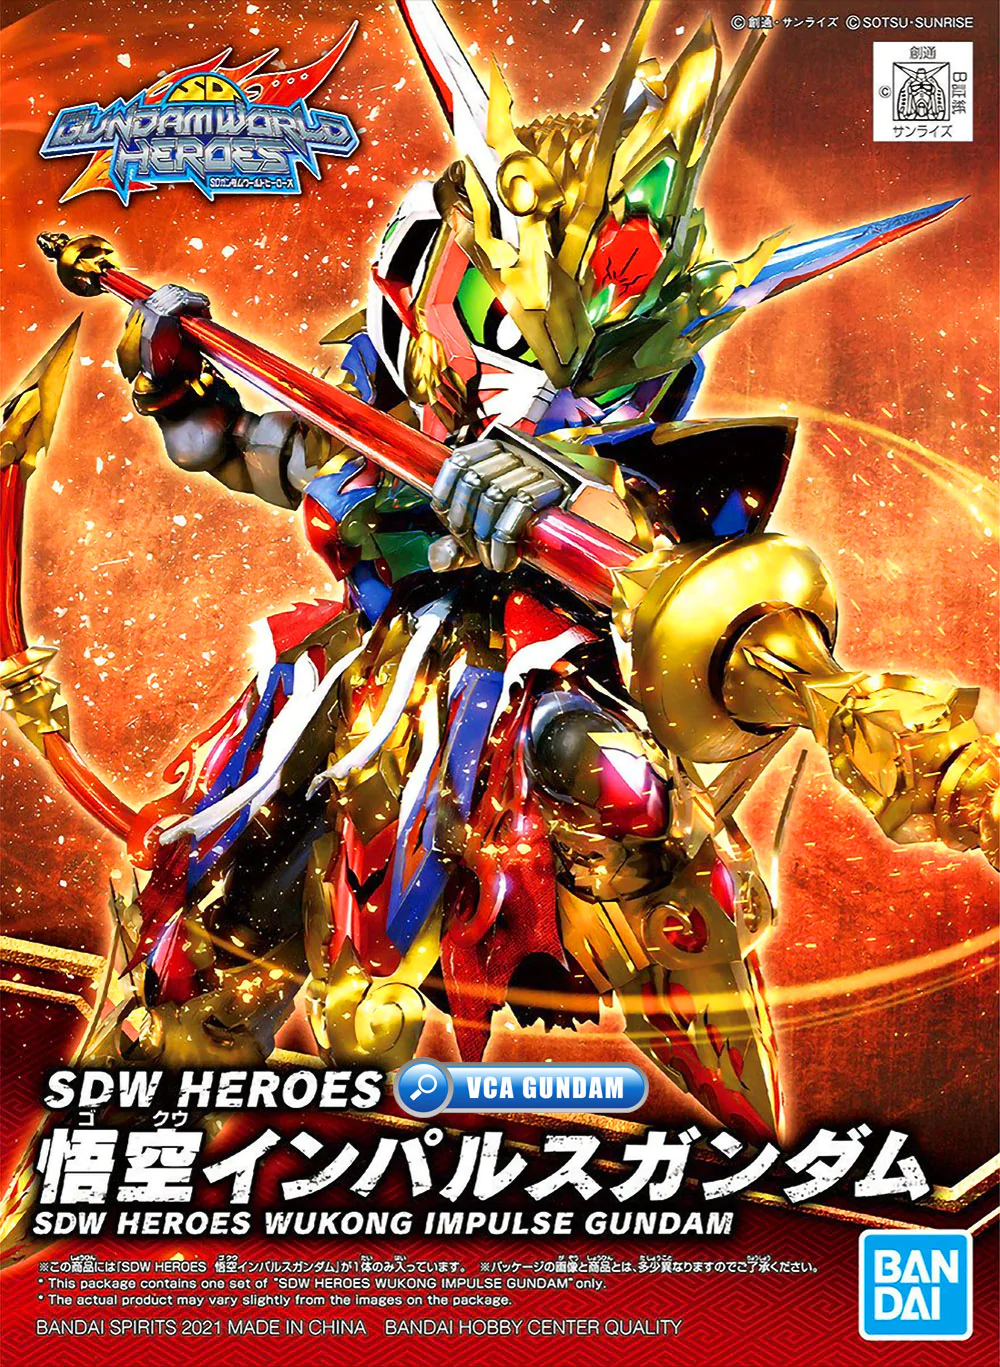 BANDAI 5061548 #01 Wukong Impulse Gundam "SD Gundam World Heroes", Bandai Spirits Hobby SDW Heroes